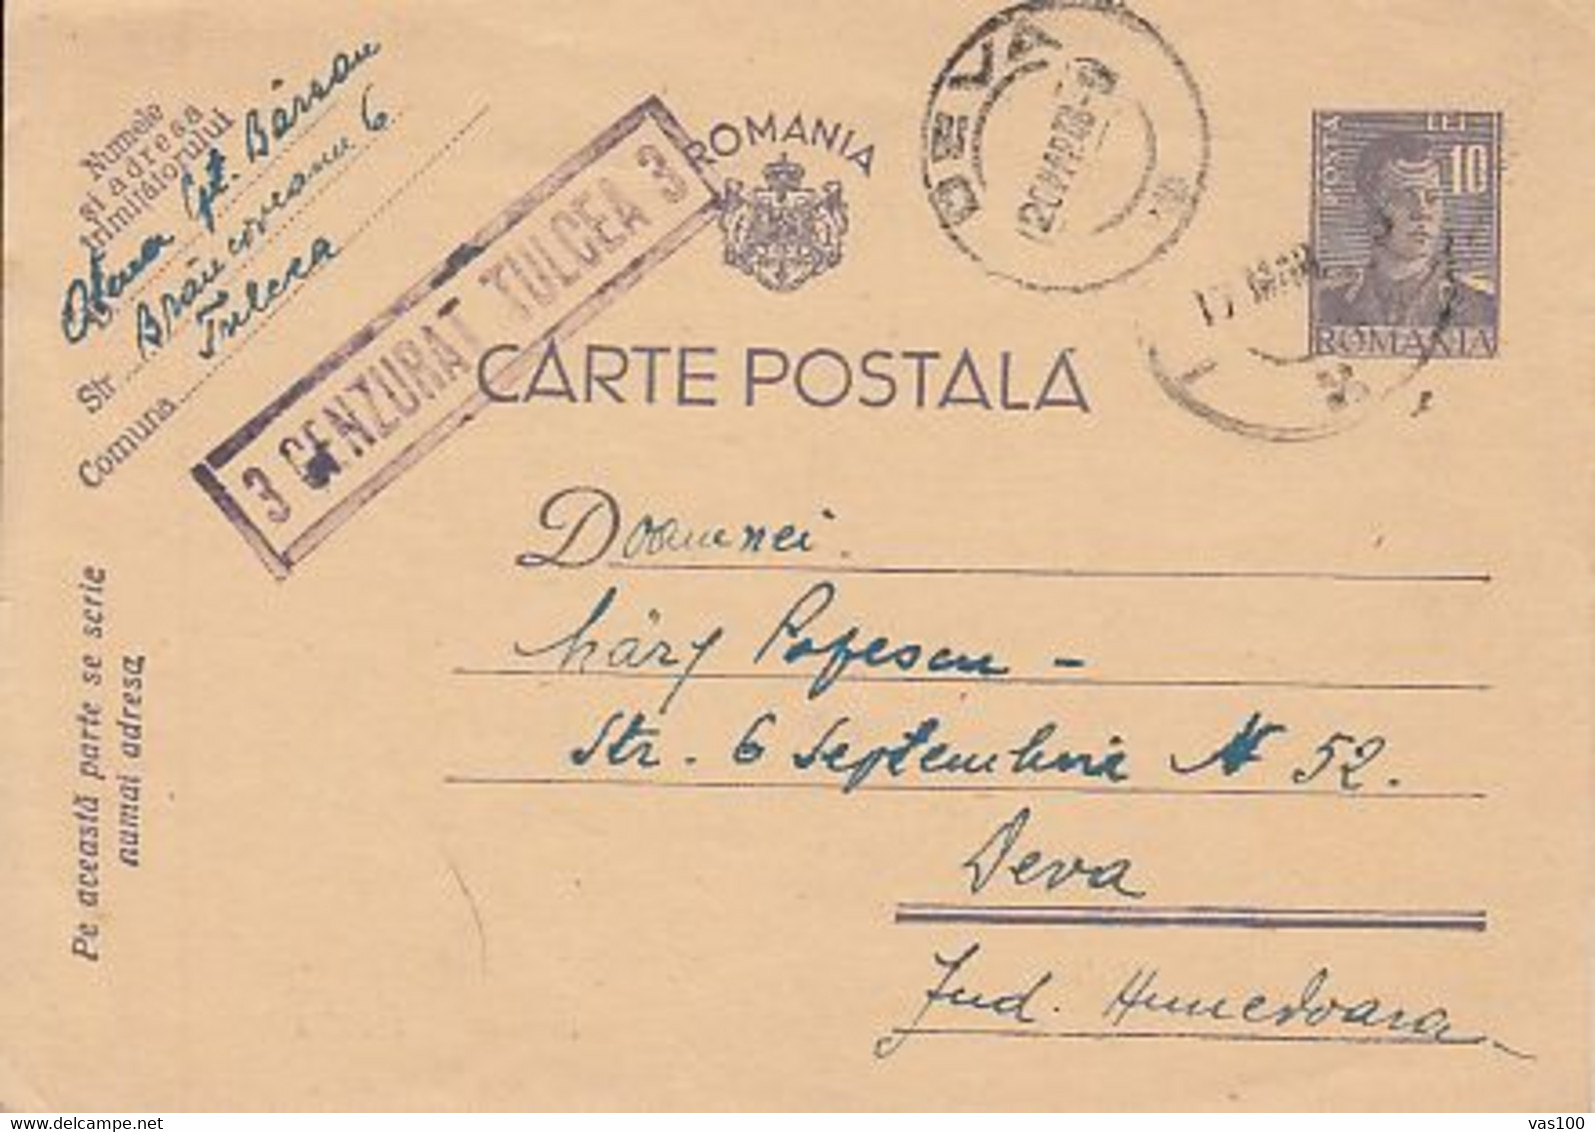 WW2 LETTERS, CENSORED TULCEA NR 3, KING MICHAEL PC STATIONERY, ENTIER POSTAL, 1944, ROMANIA - World War 2 Letters